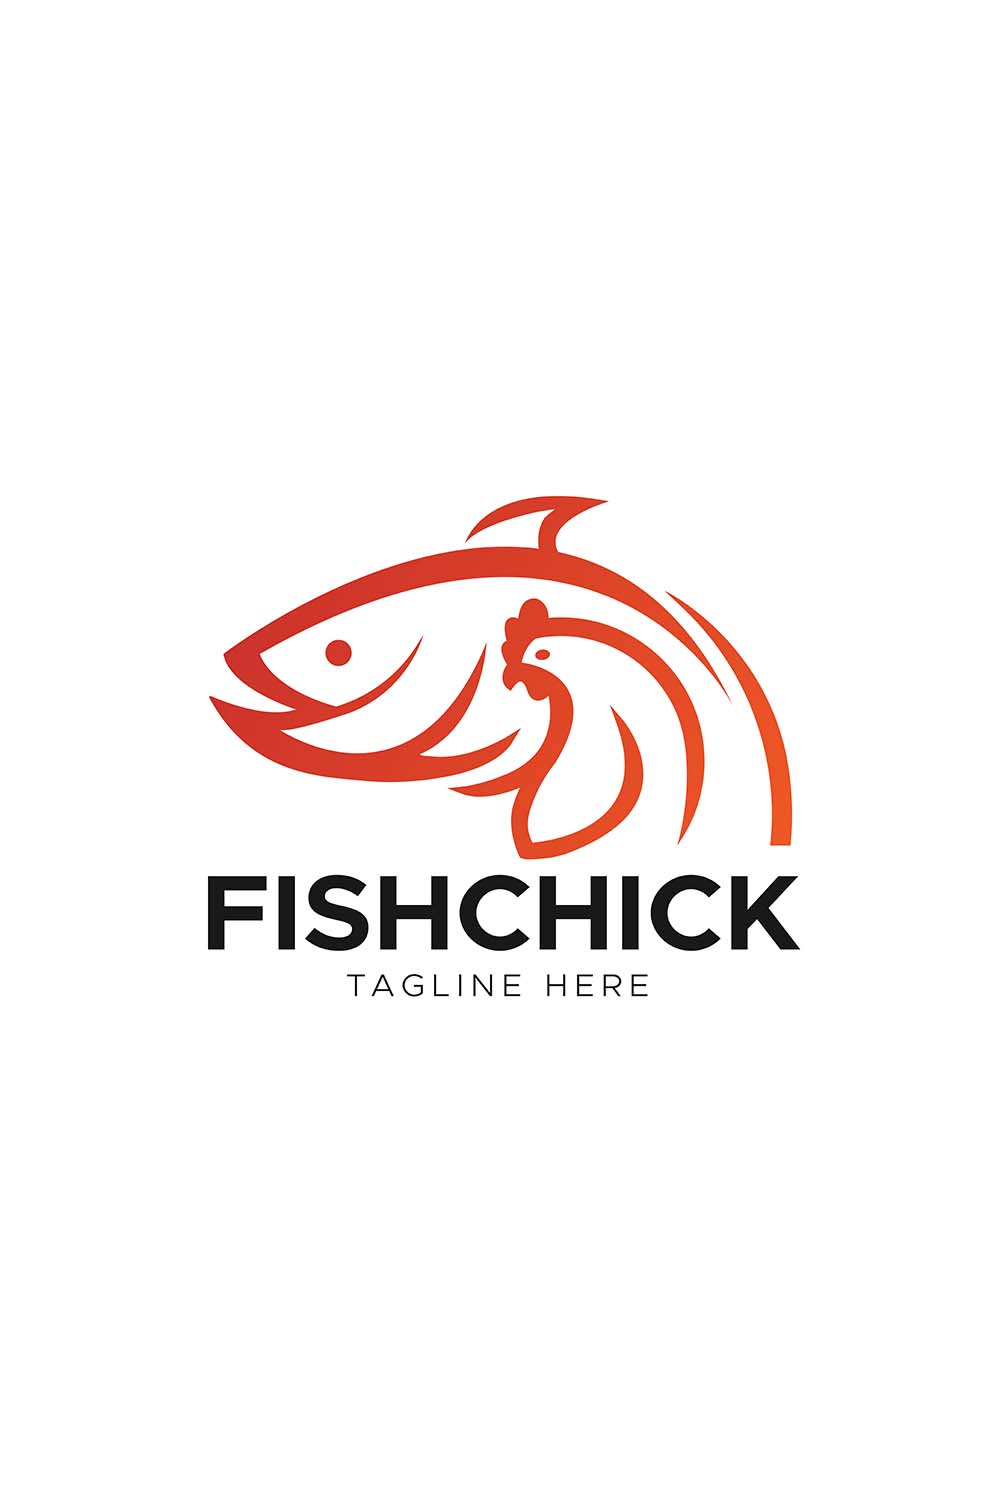 Fishchick Logo Design Template pinterest preview image.